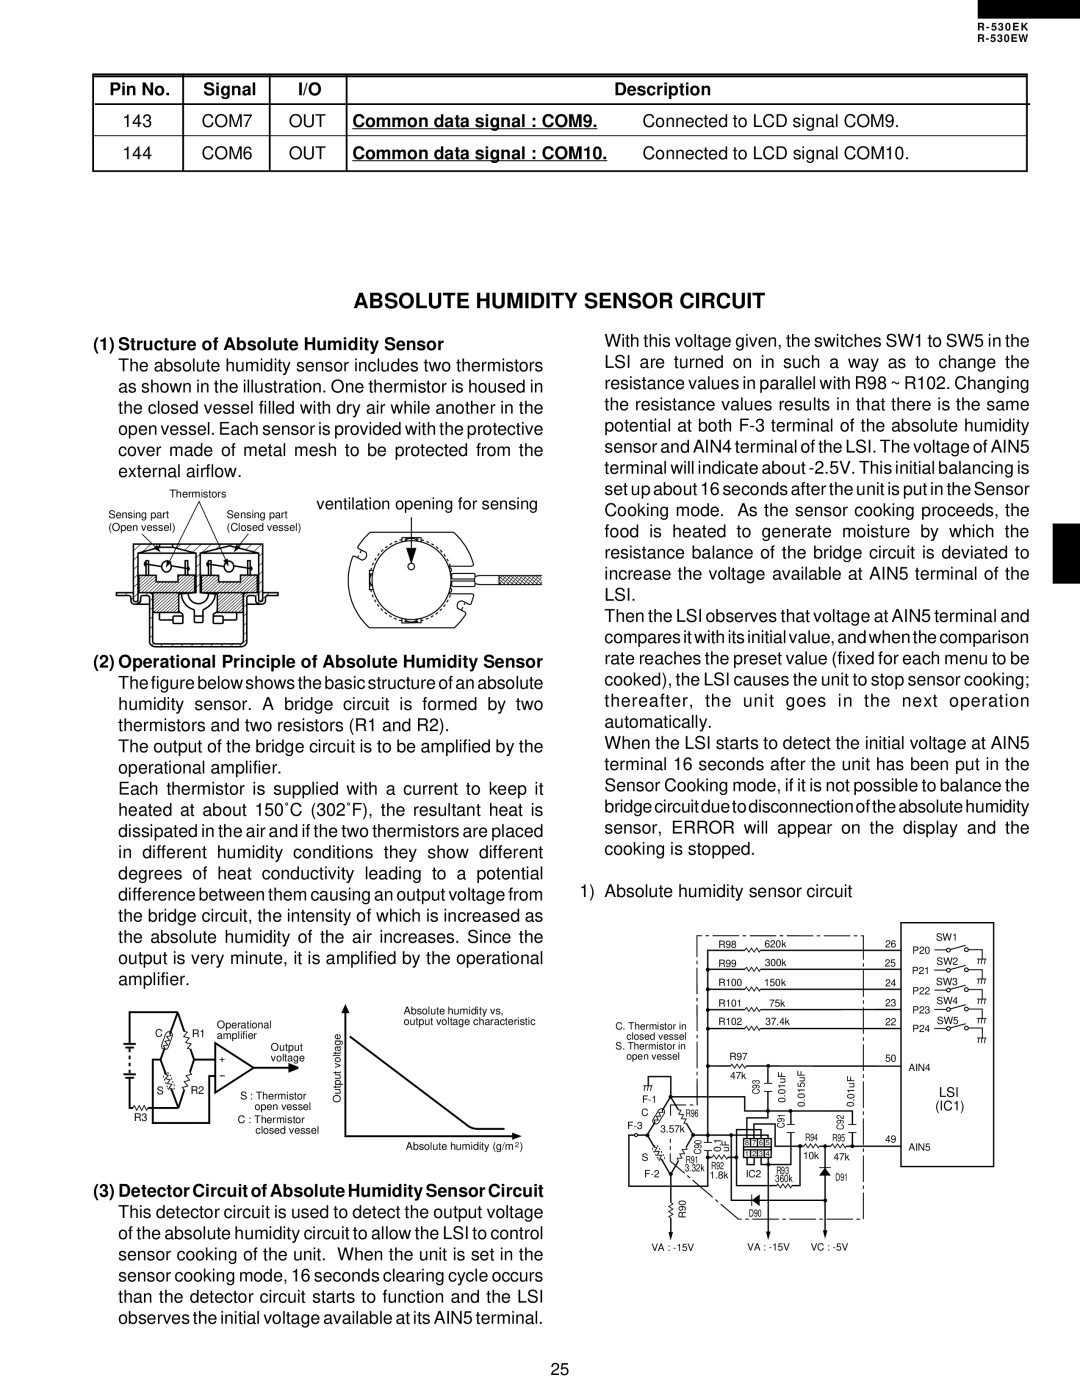 Sharp R-530EK service manual Absolute Humidity Sensor Circuit, Pin No, Signal, Description, Common data signal COM9 